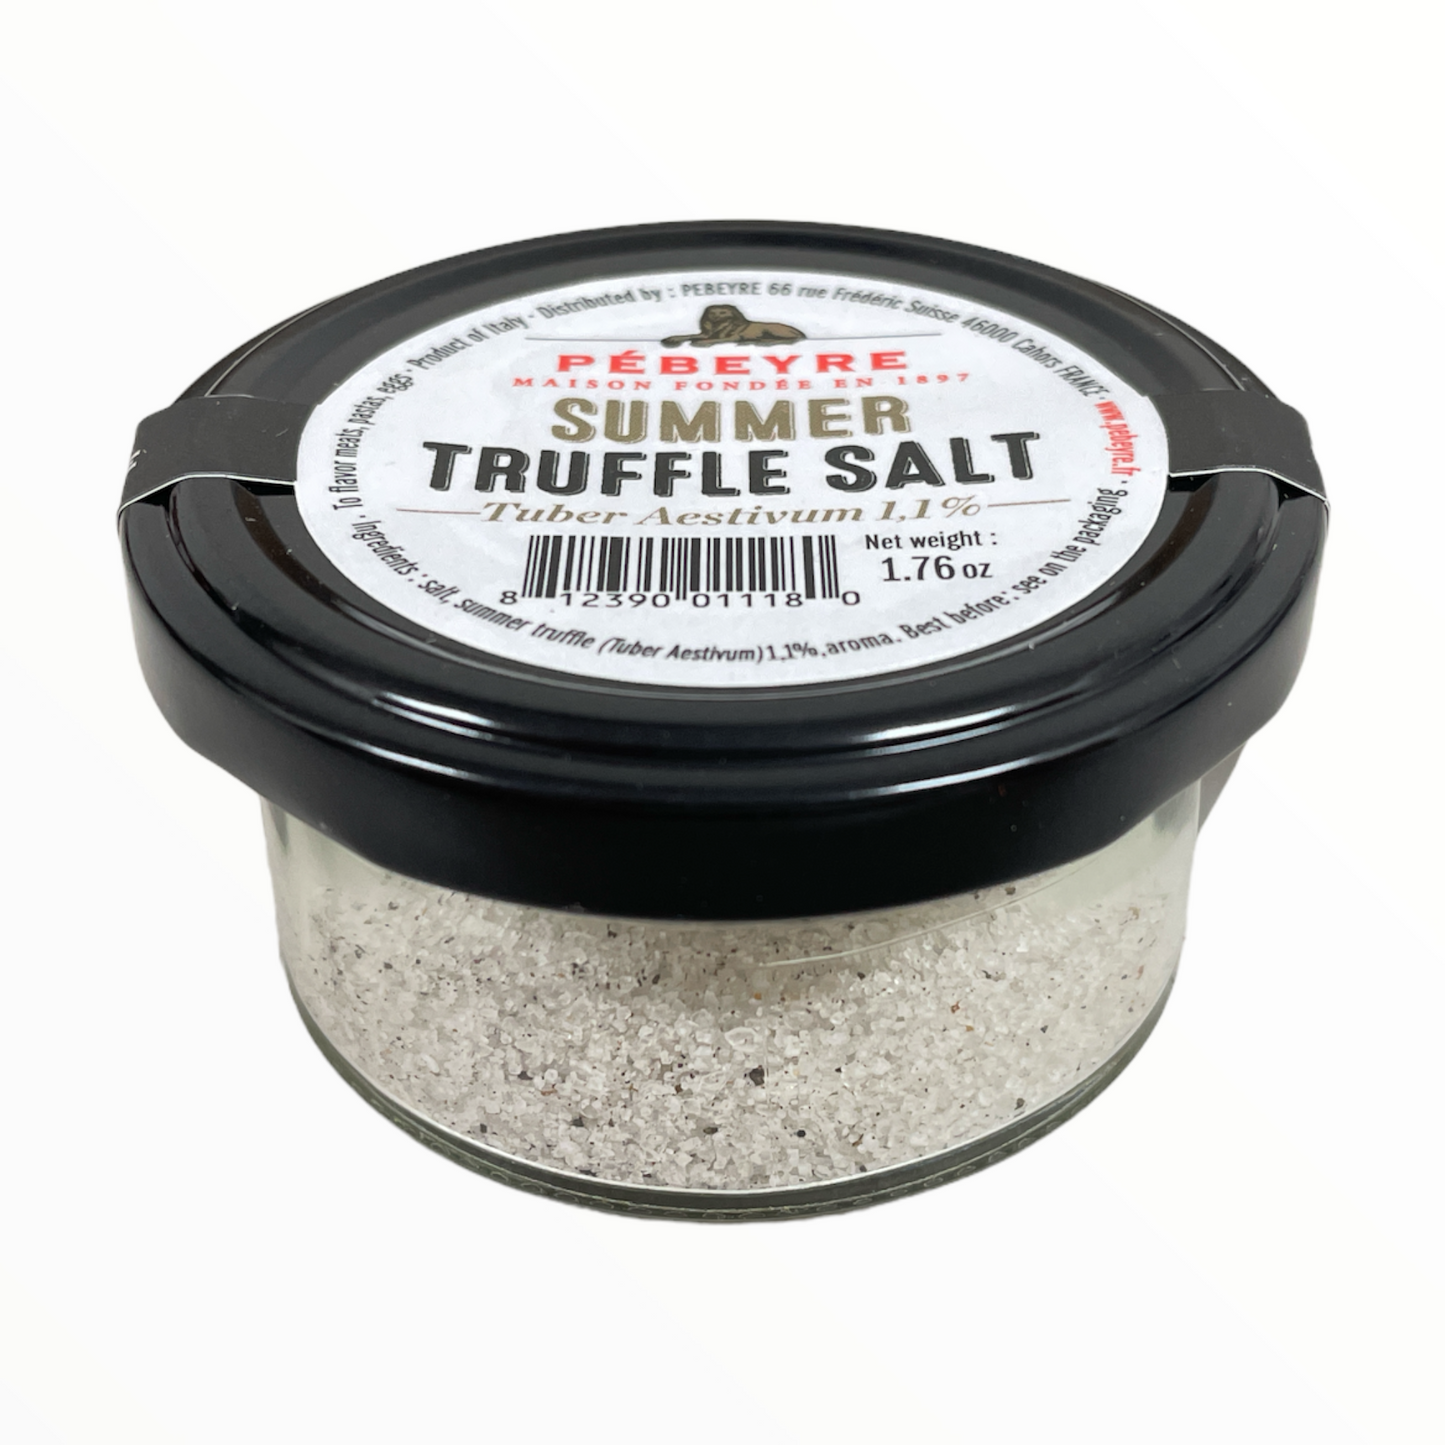 Pebeyre Summer Truffle Salt 1.8 oz (50g)